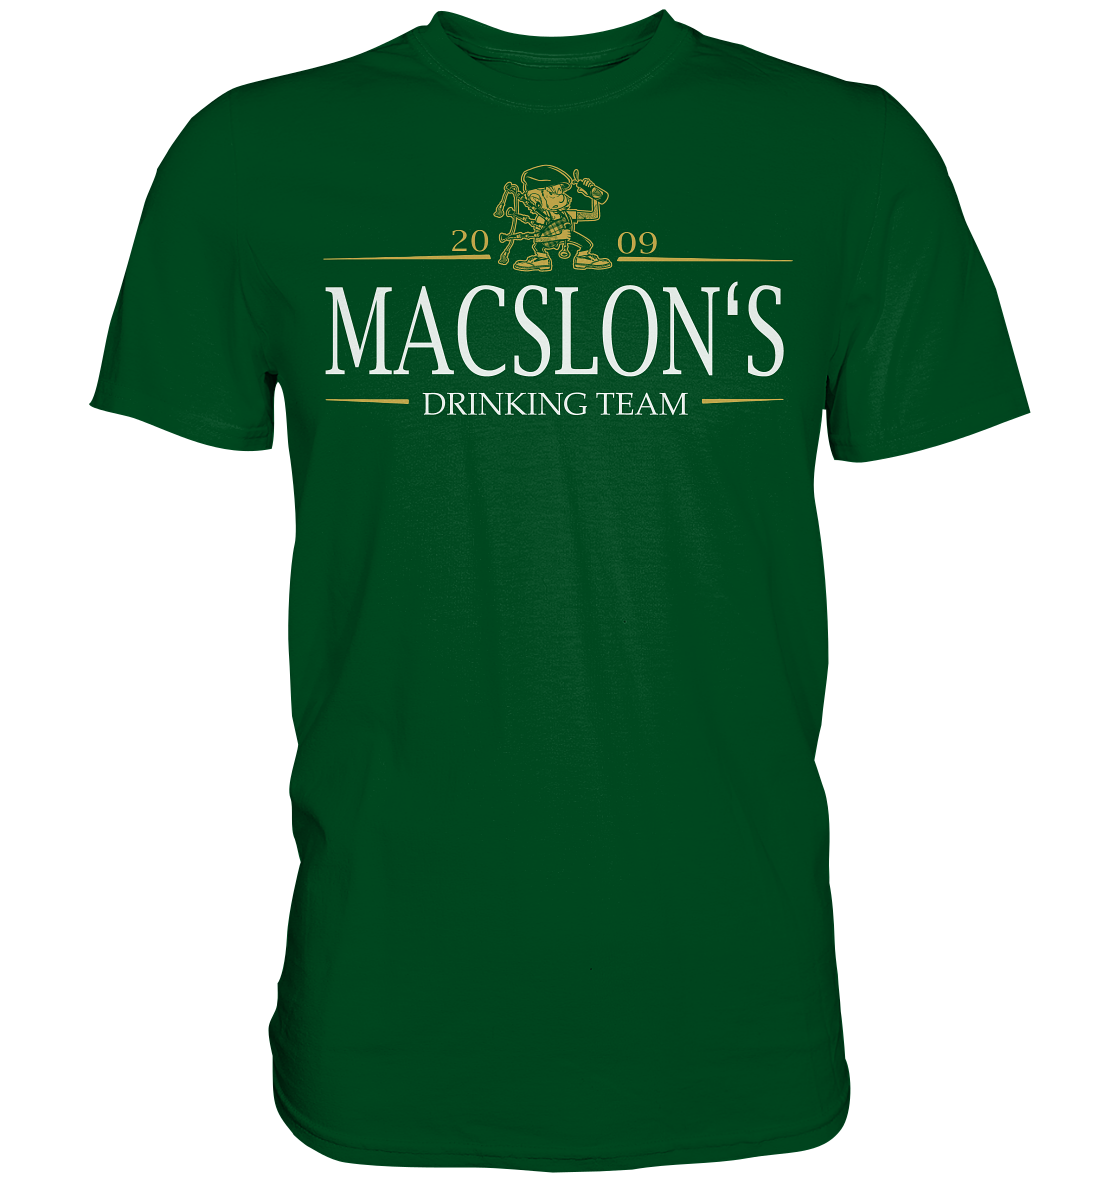 MacSlon's "Drinking Team" - Premium Shirt